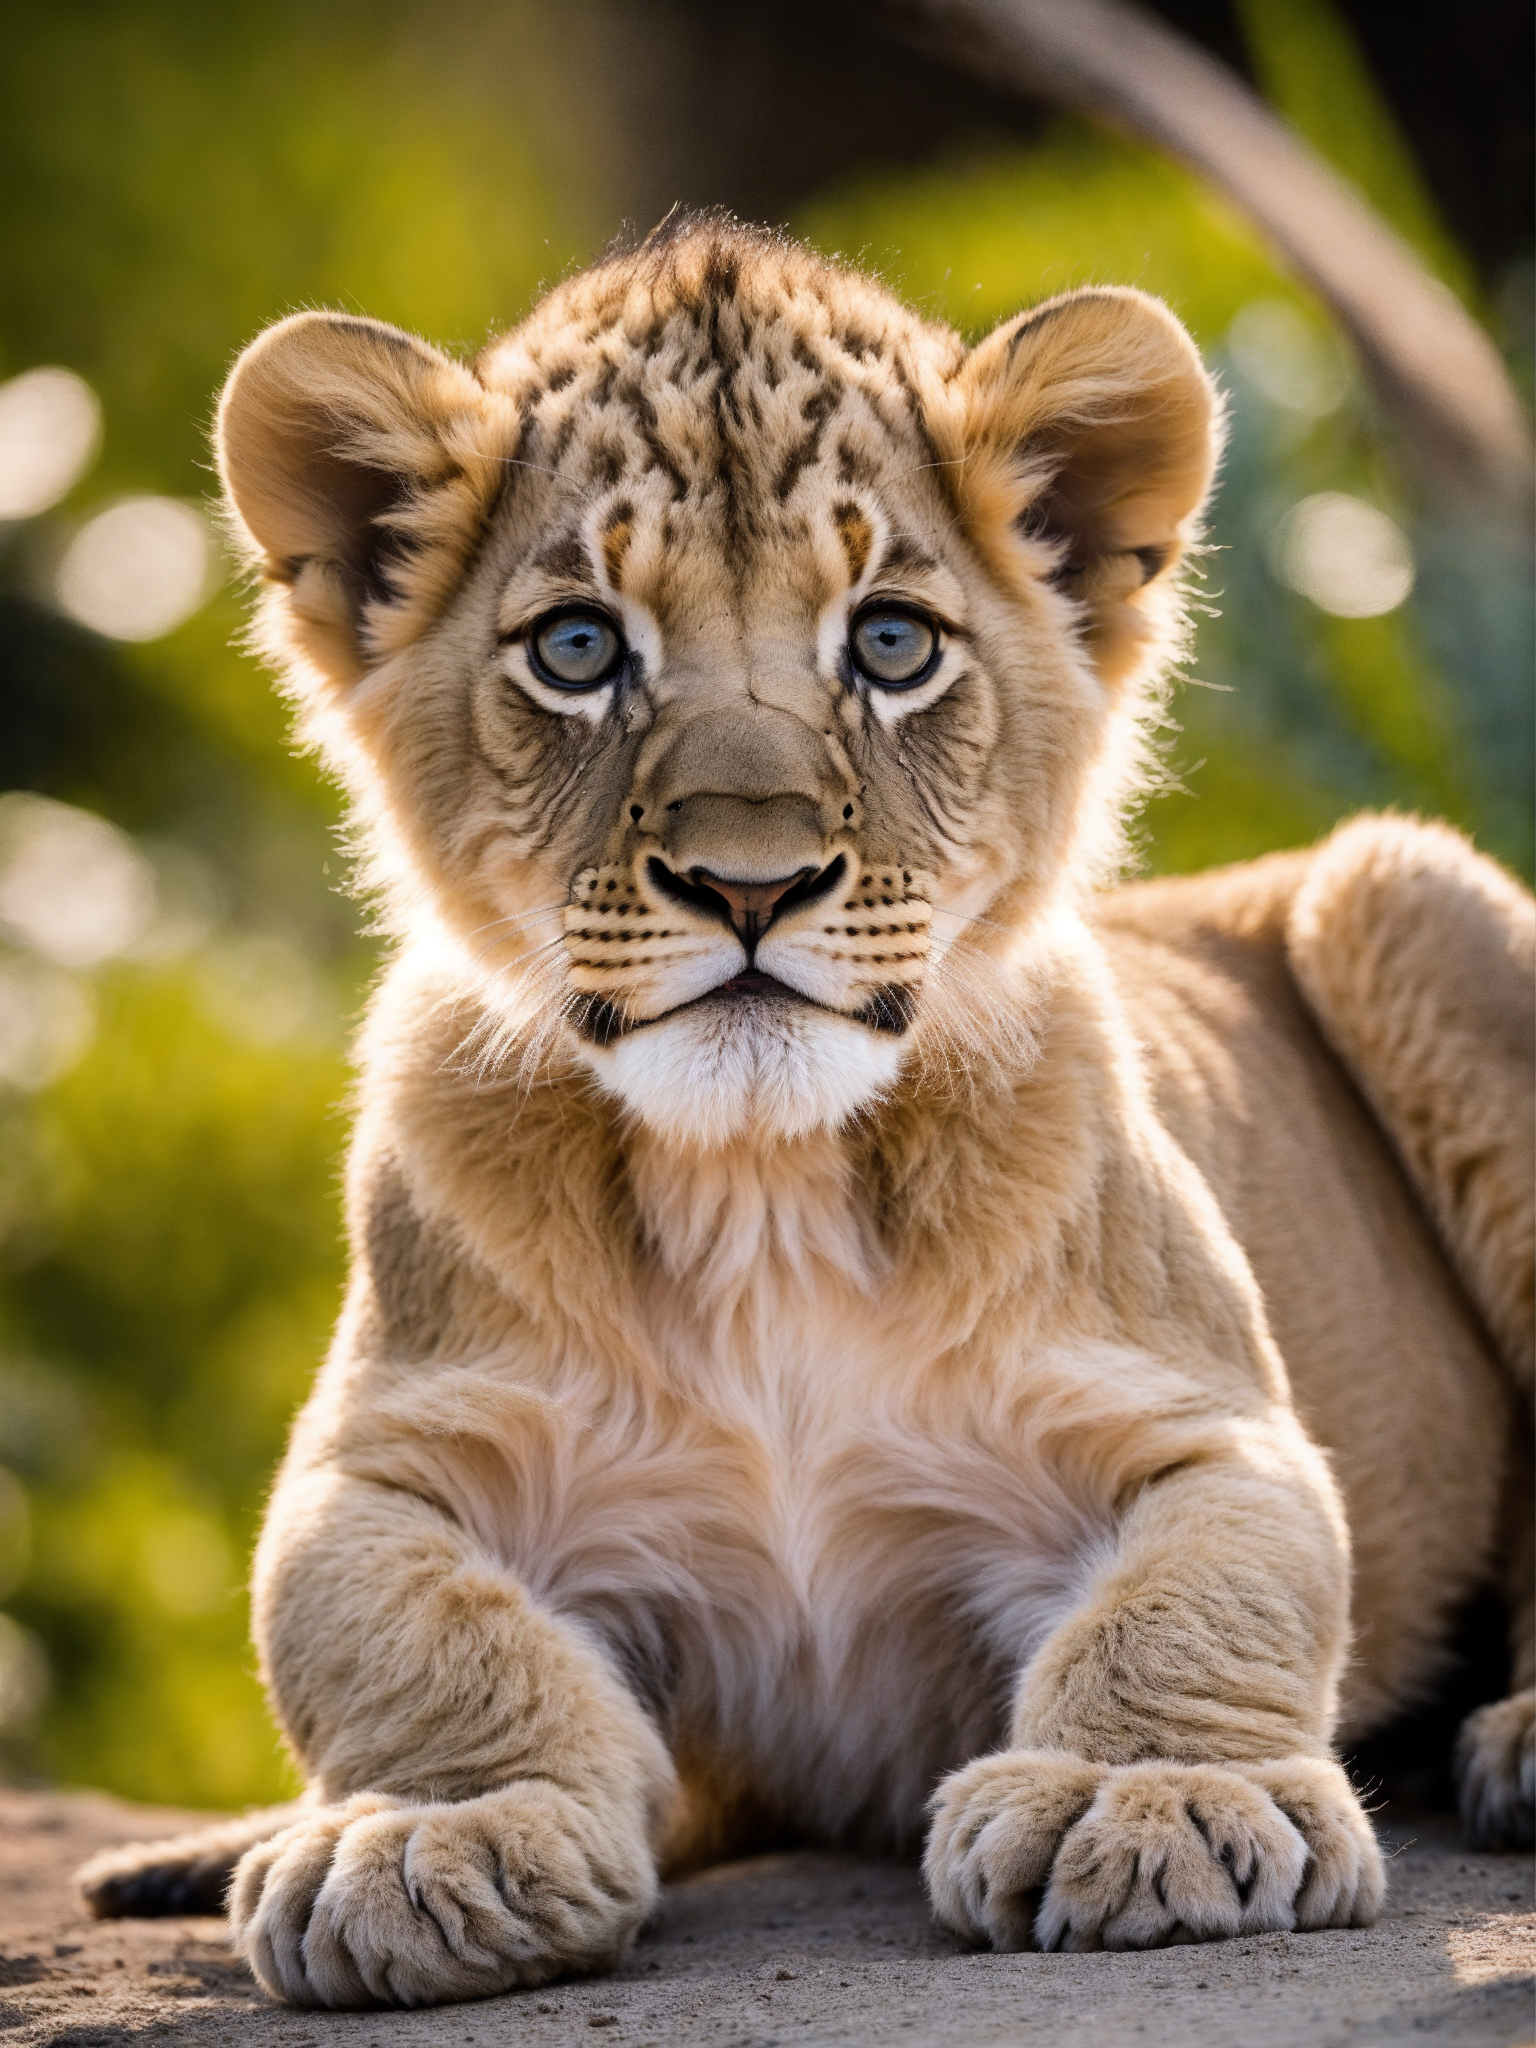 RAW photo, Fuji X-T20, high quality, a baby lion, cute